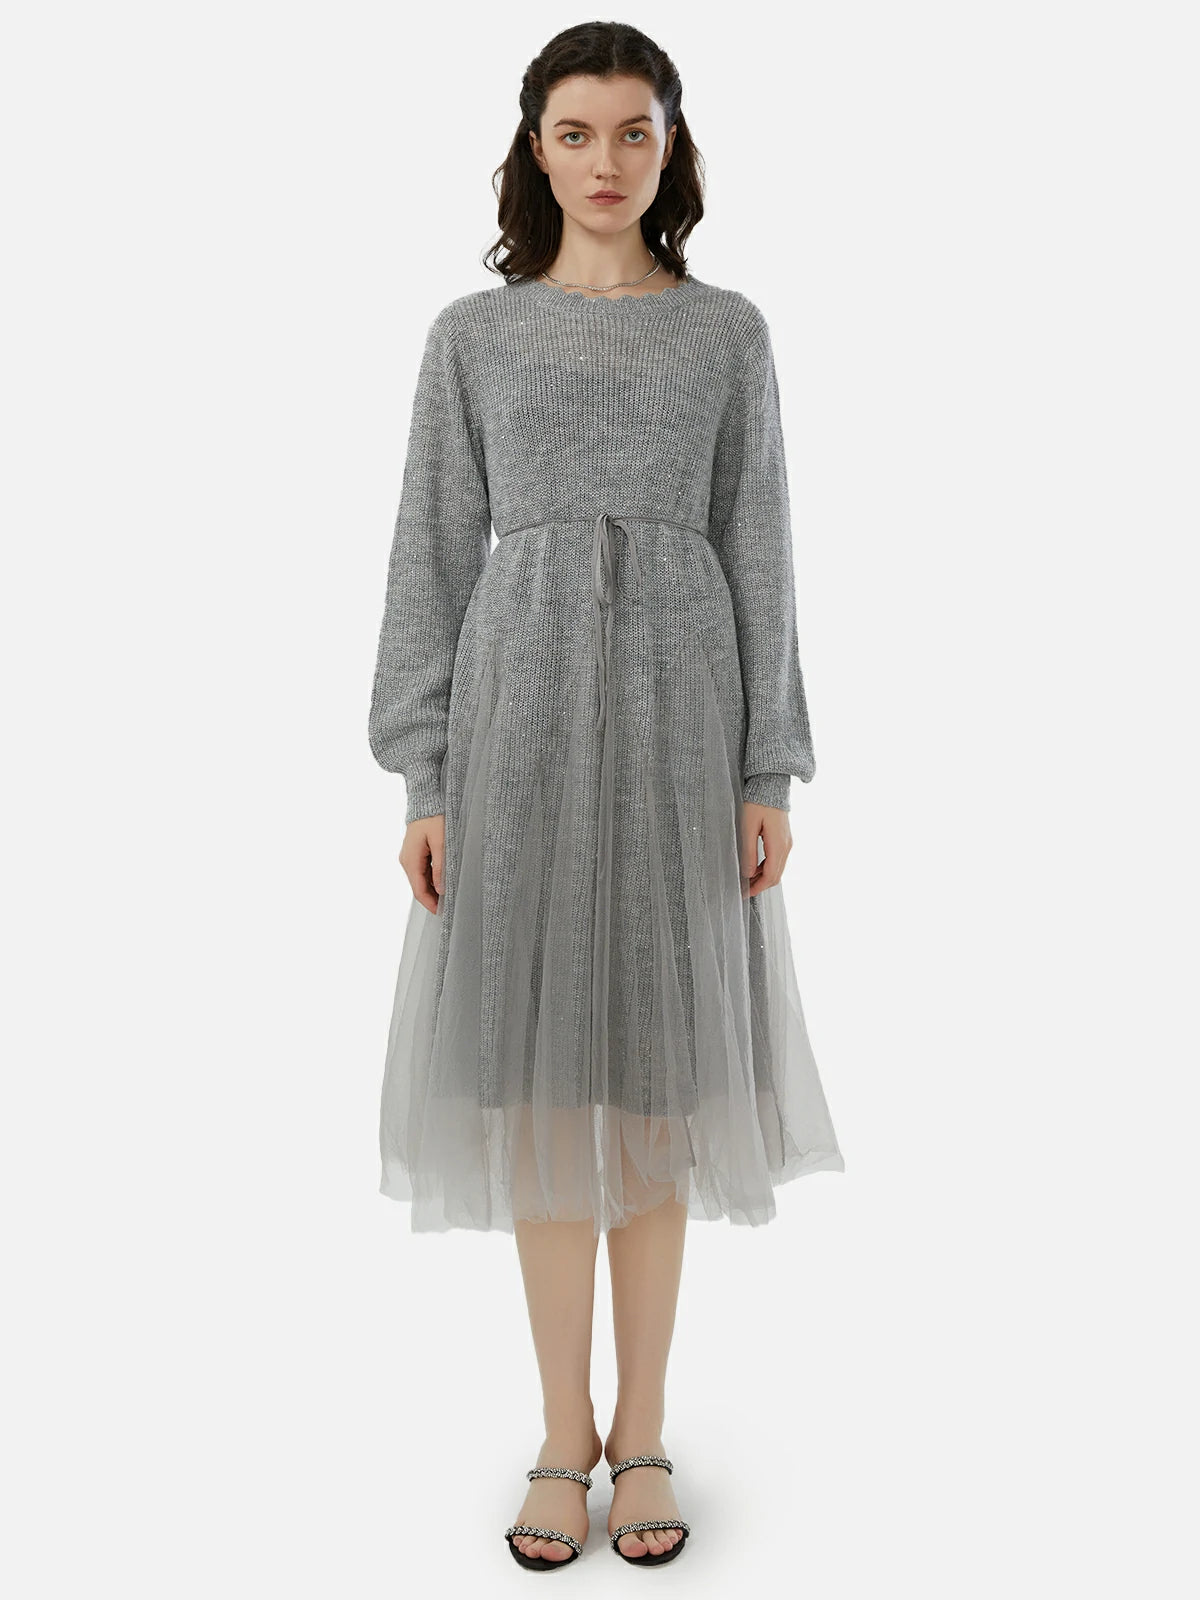 A-line Mesh Knit Two-Piece Dress